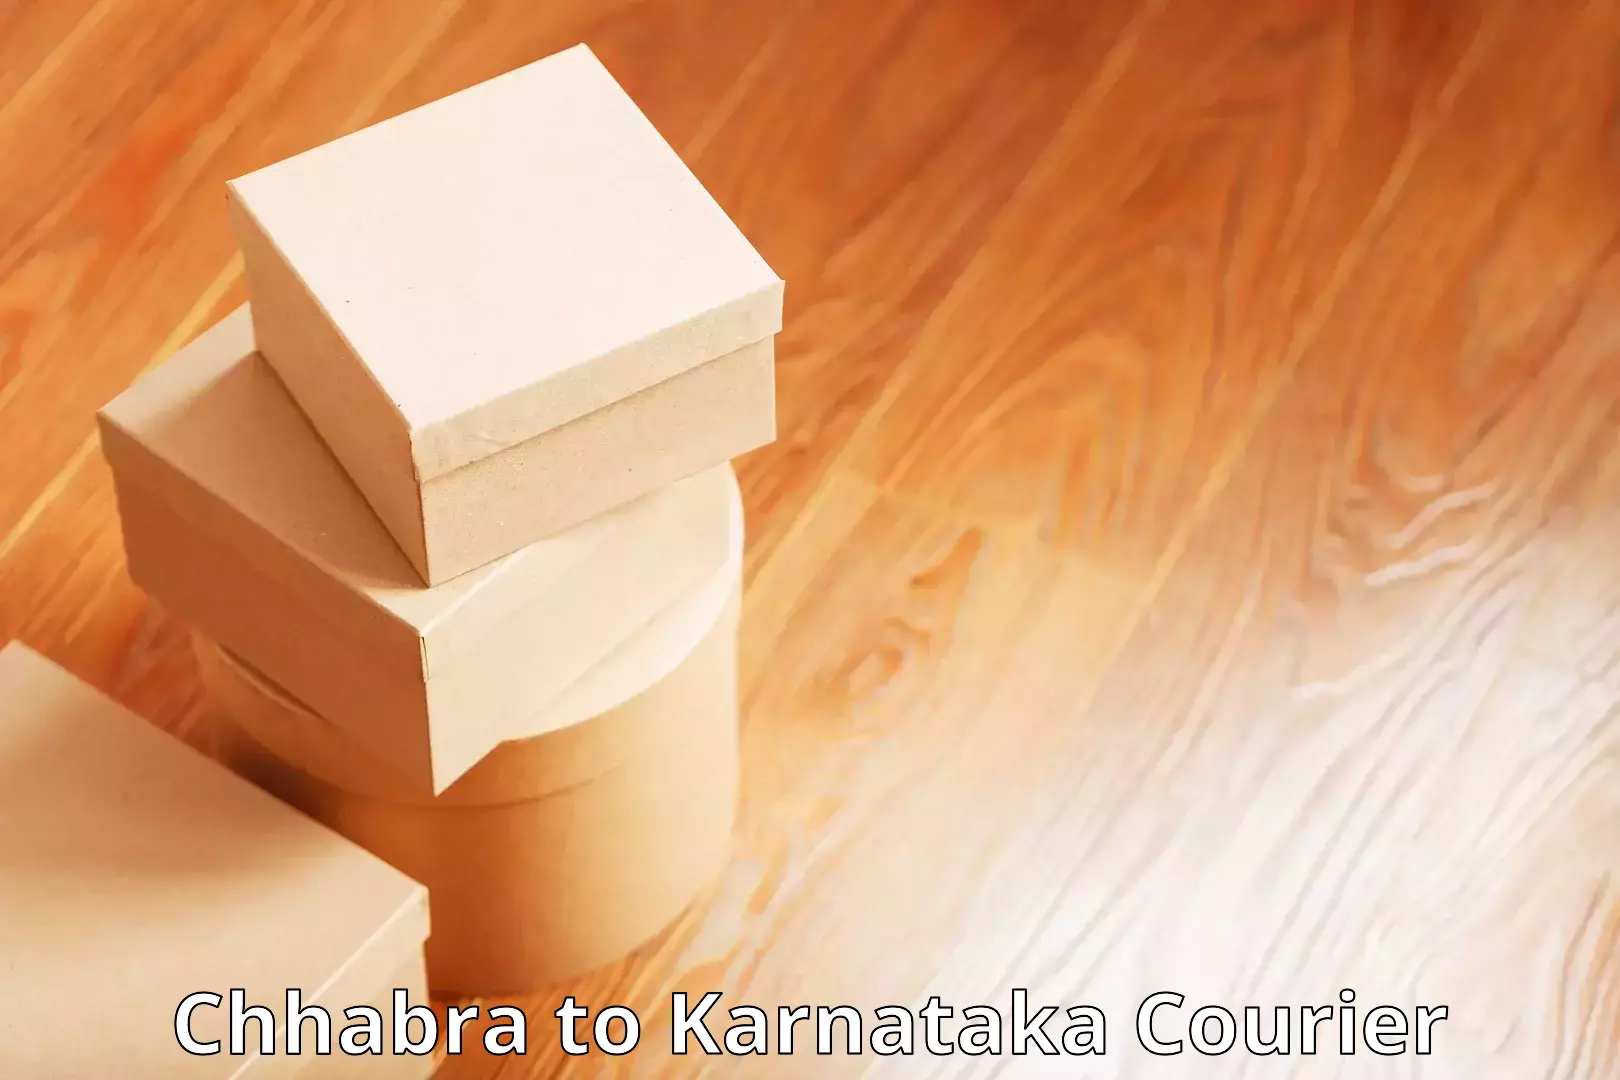 Local delivery service Chhabra to Karnataka